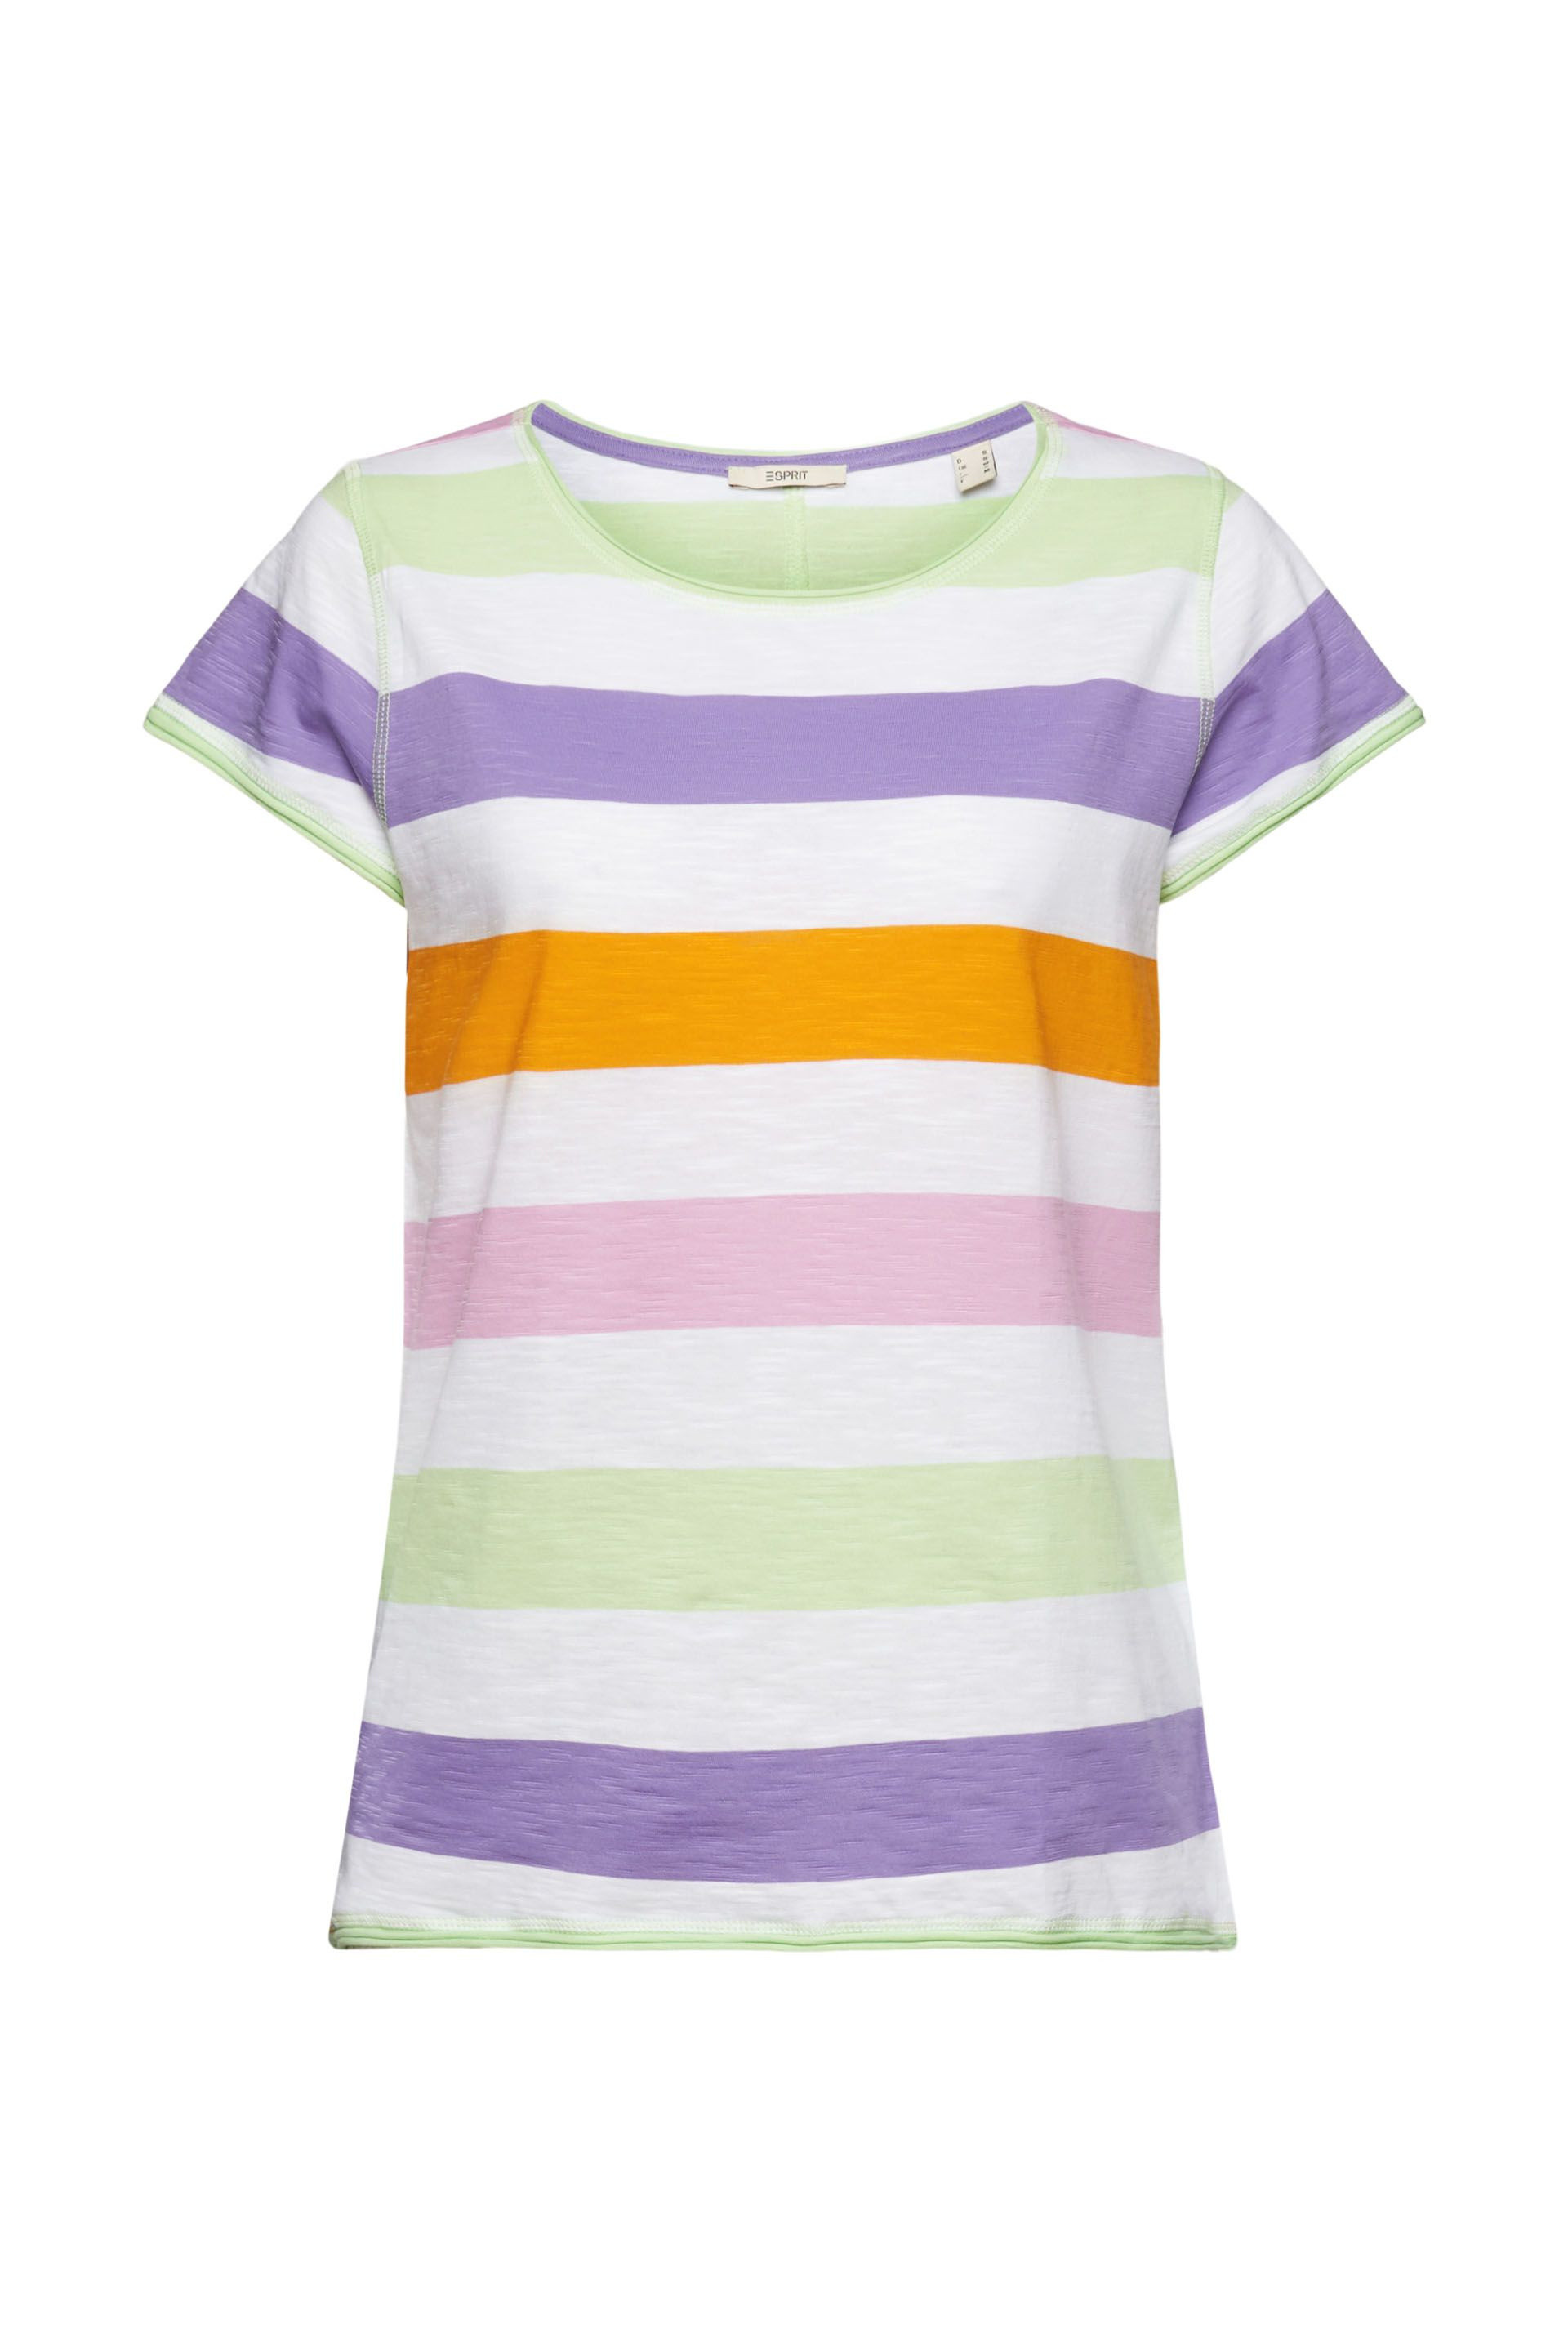 Esprit - T-shirt a righe, Multicolor, large image number 0